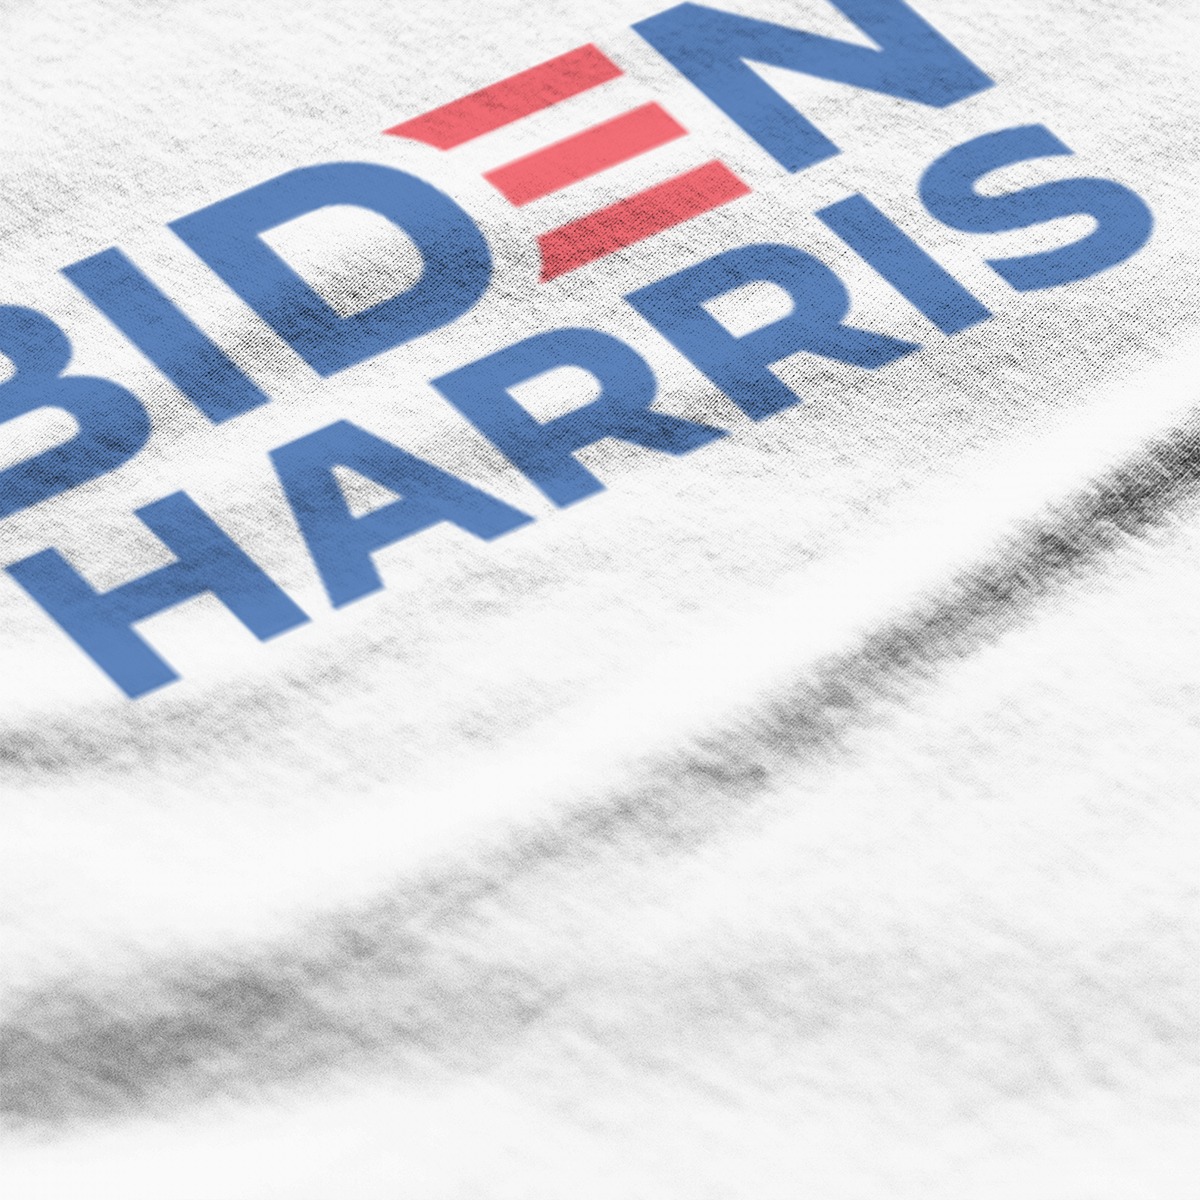 Biden Harris 2020 White Men's T Shirt Novelty Tops Bitumen Bike Life Tees Clothes Cotton Printed T-Shirt Plus Size T-shirt 3309